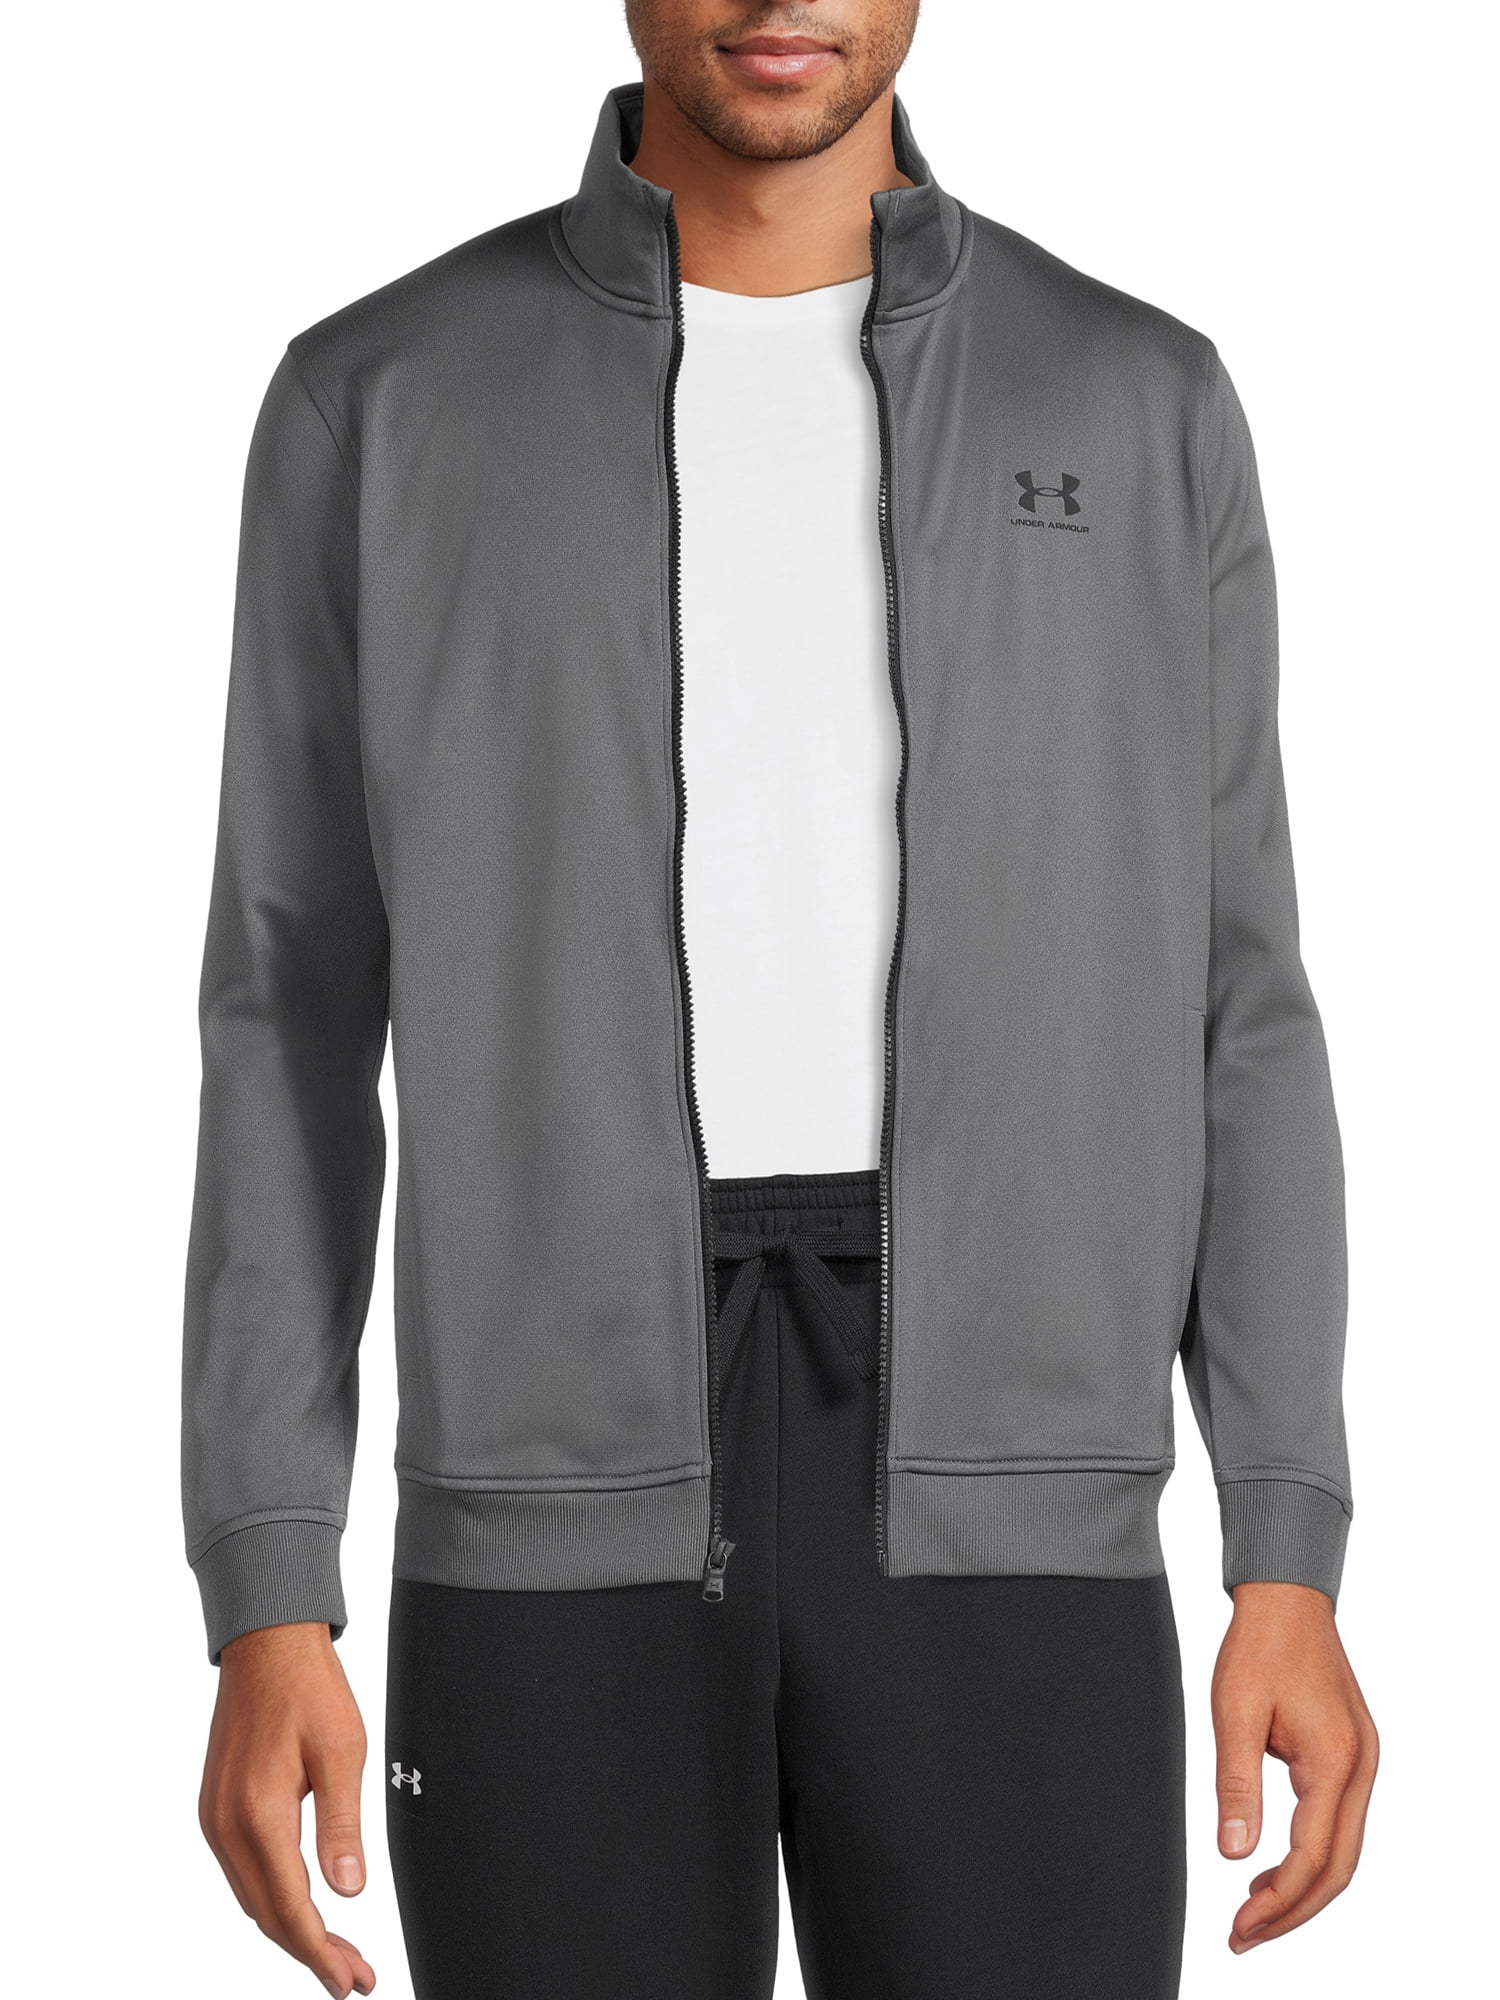 Under Armour Men's UA Sportstyle Tricot Jacket - Men's running jacket